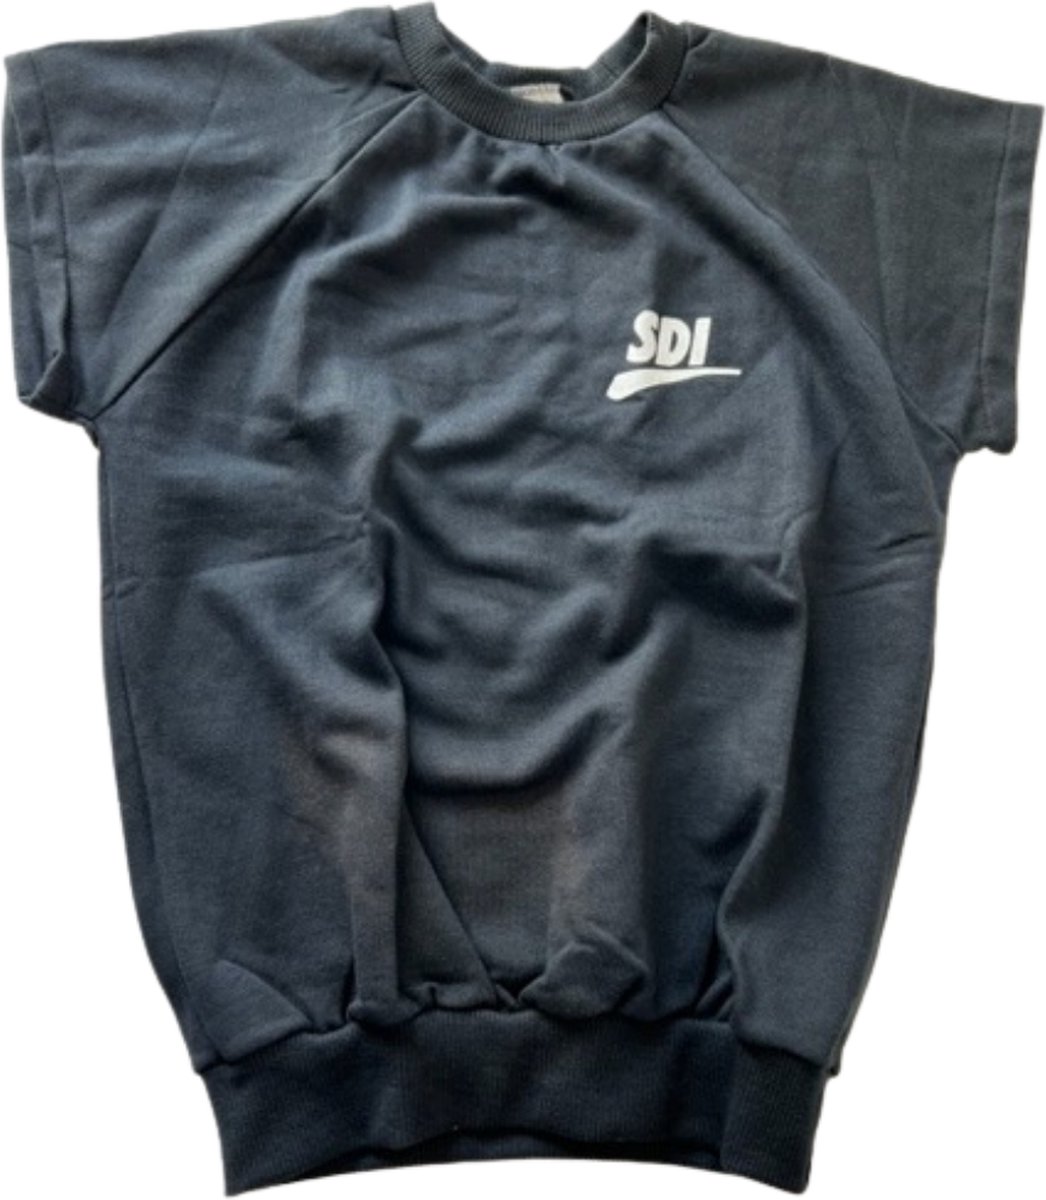 SDI - opwarm T-shirt - boksen - maat L - zwart